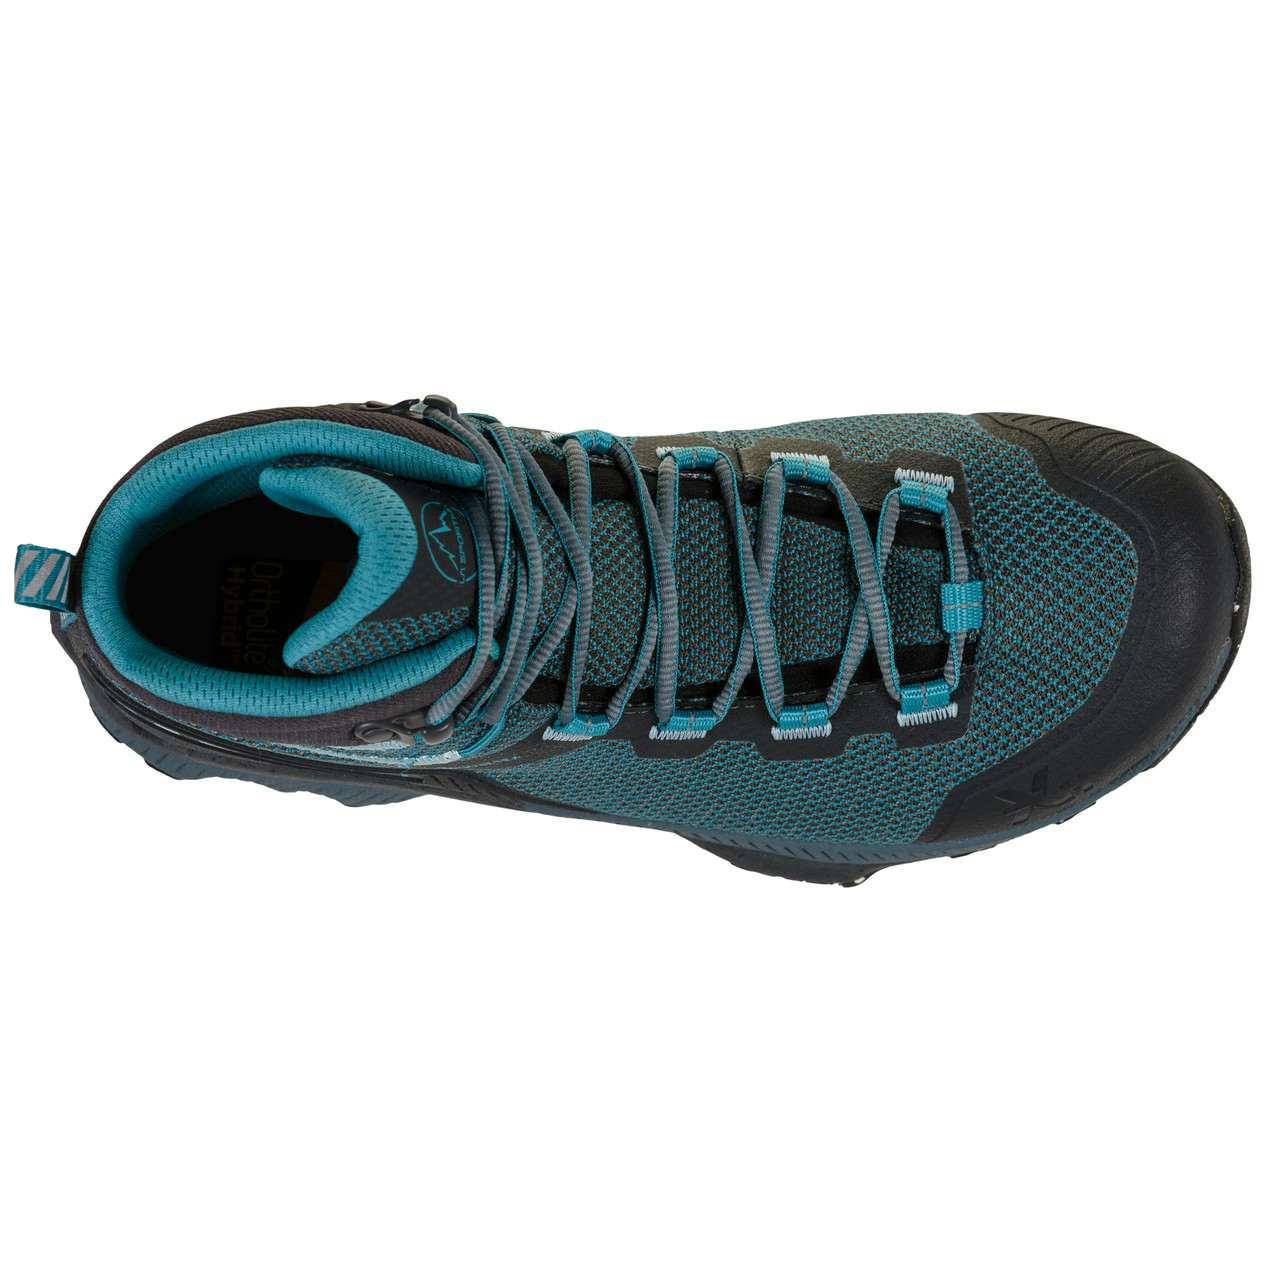 TX Hike Mid Gore-Tex Light Trail Shoes Topaz/Carbon